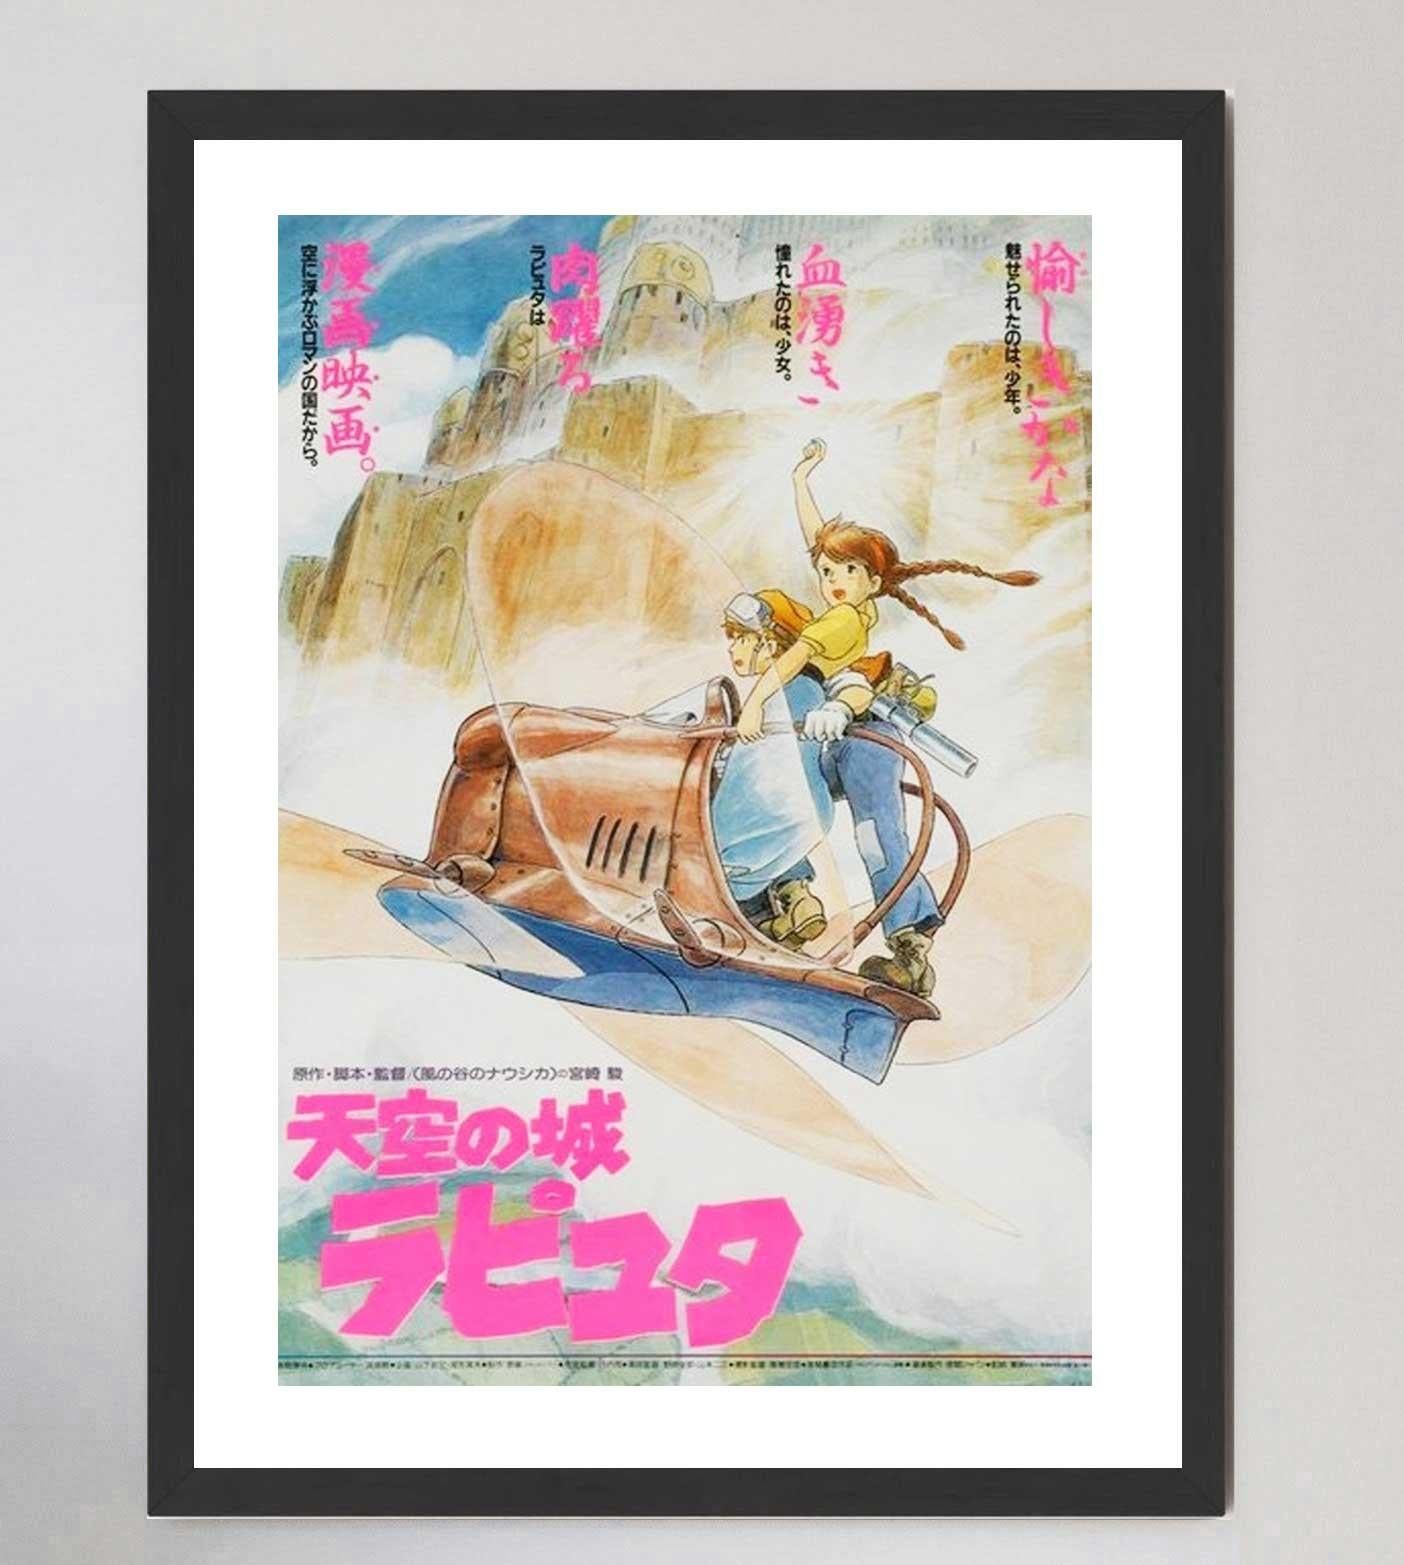 Paper 1986 Laputa Castle In The Sky (Japanese) Original Vintage Poster For Sale